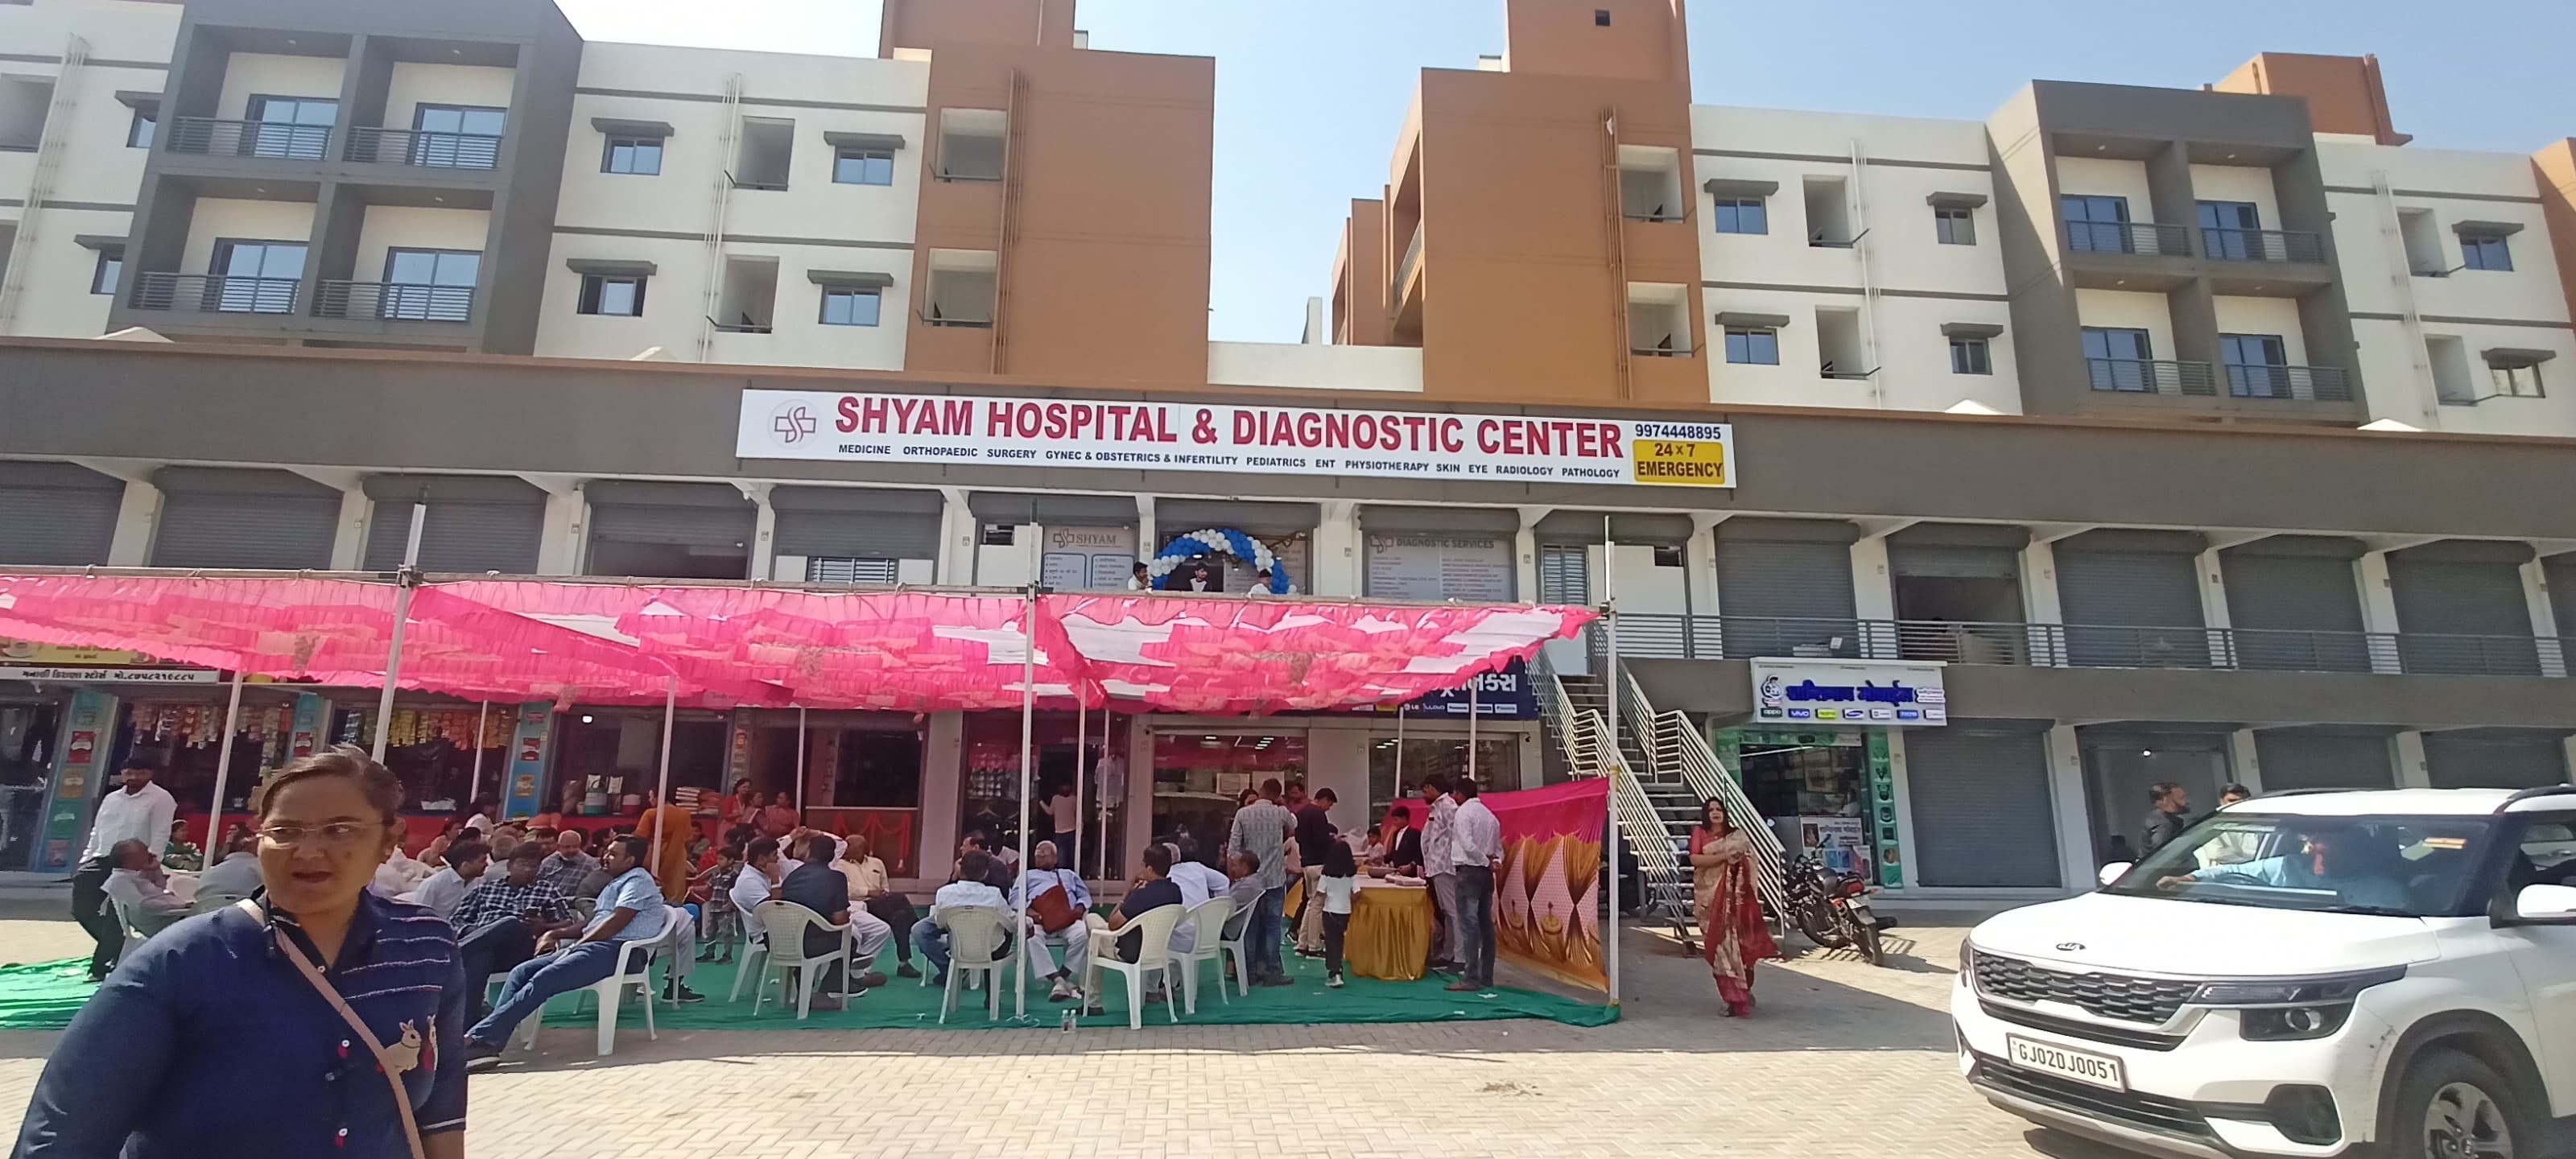 SHYAM HOSPITAL & DIAGNOSTIC CENTER - MORAIYA 